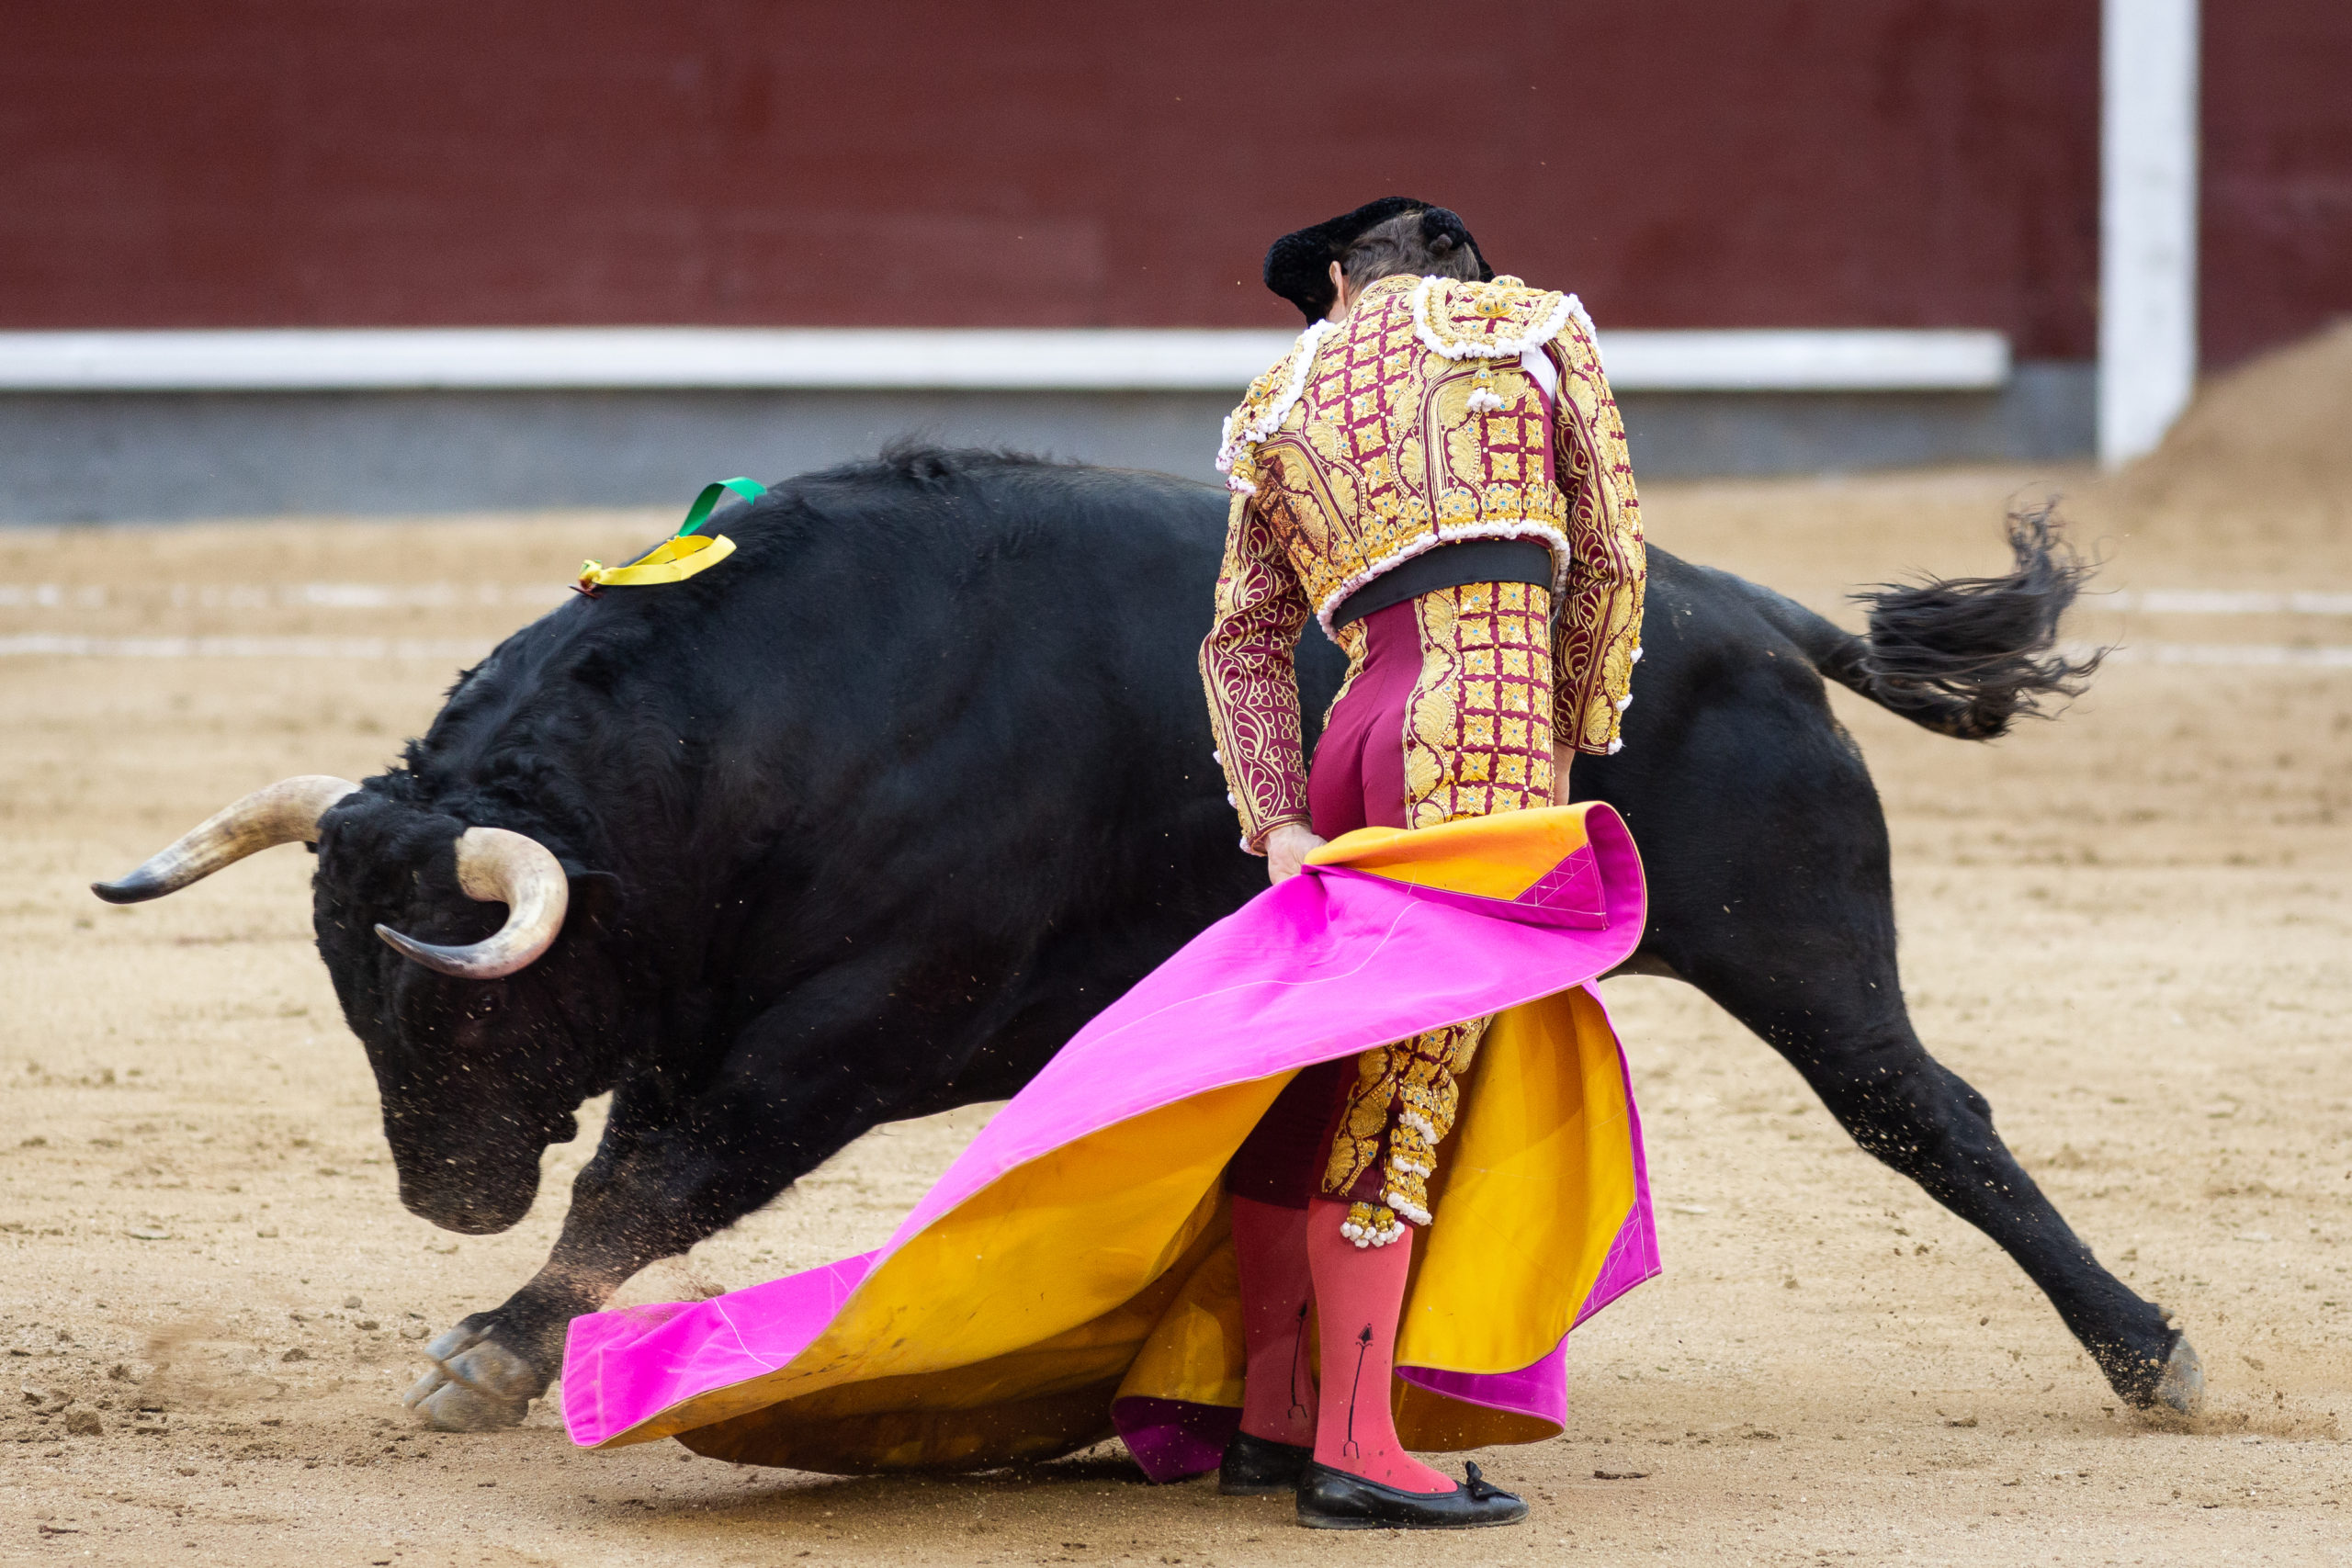 The Bull or the Matador